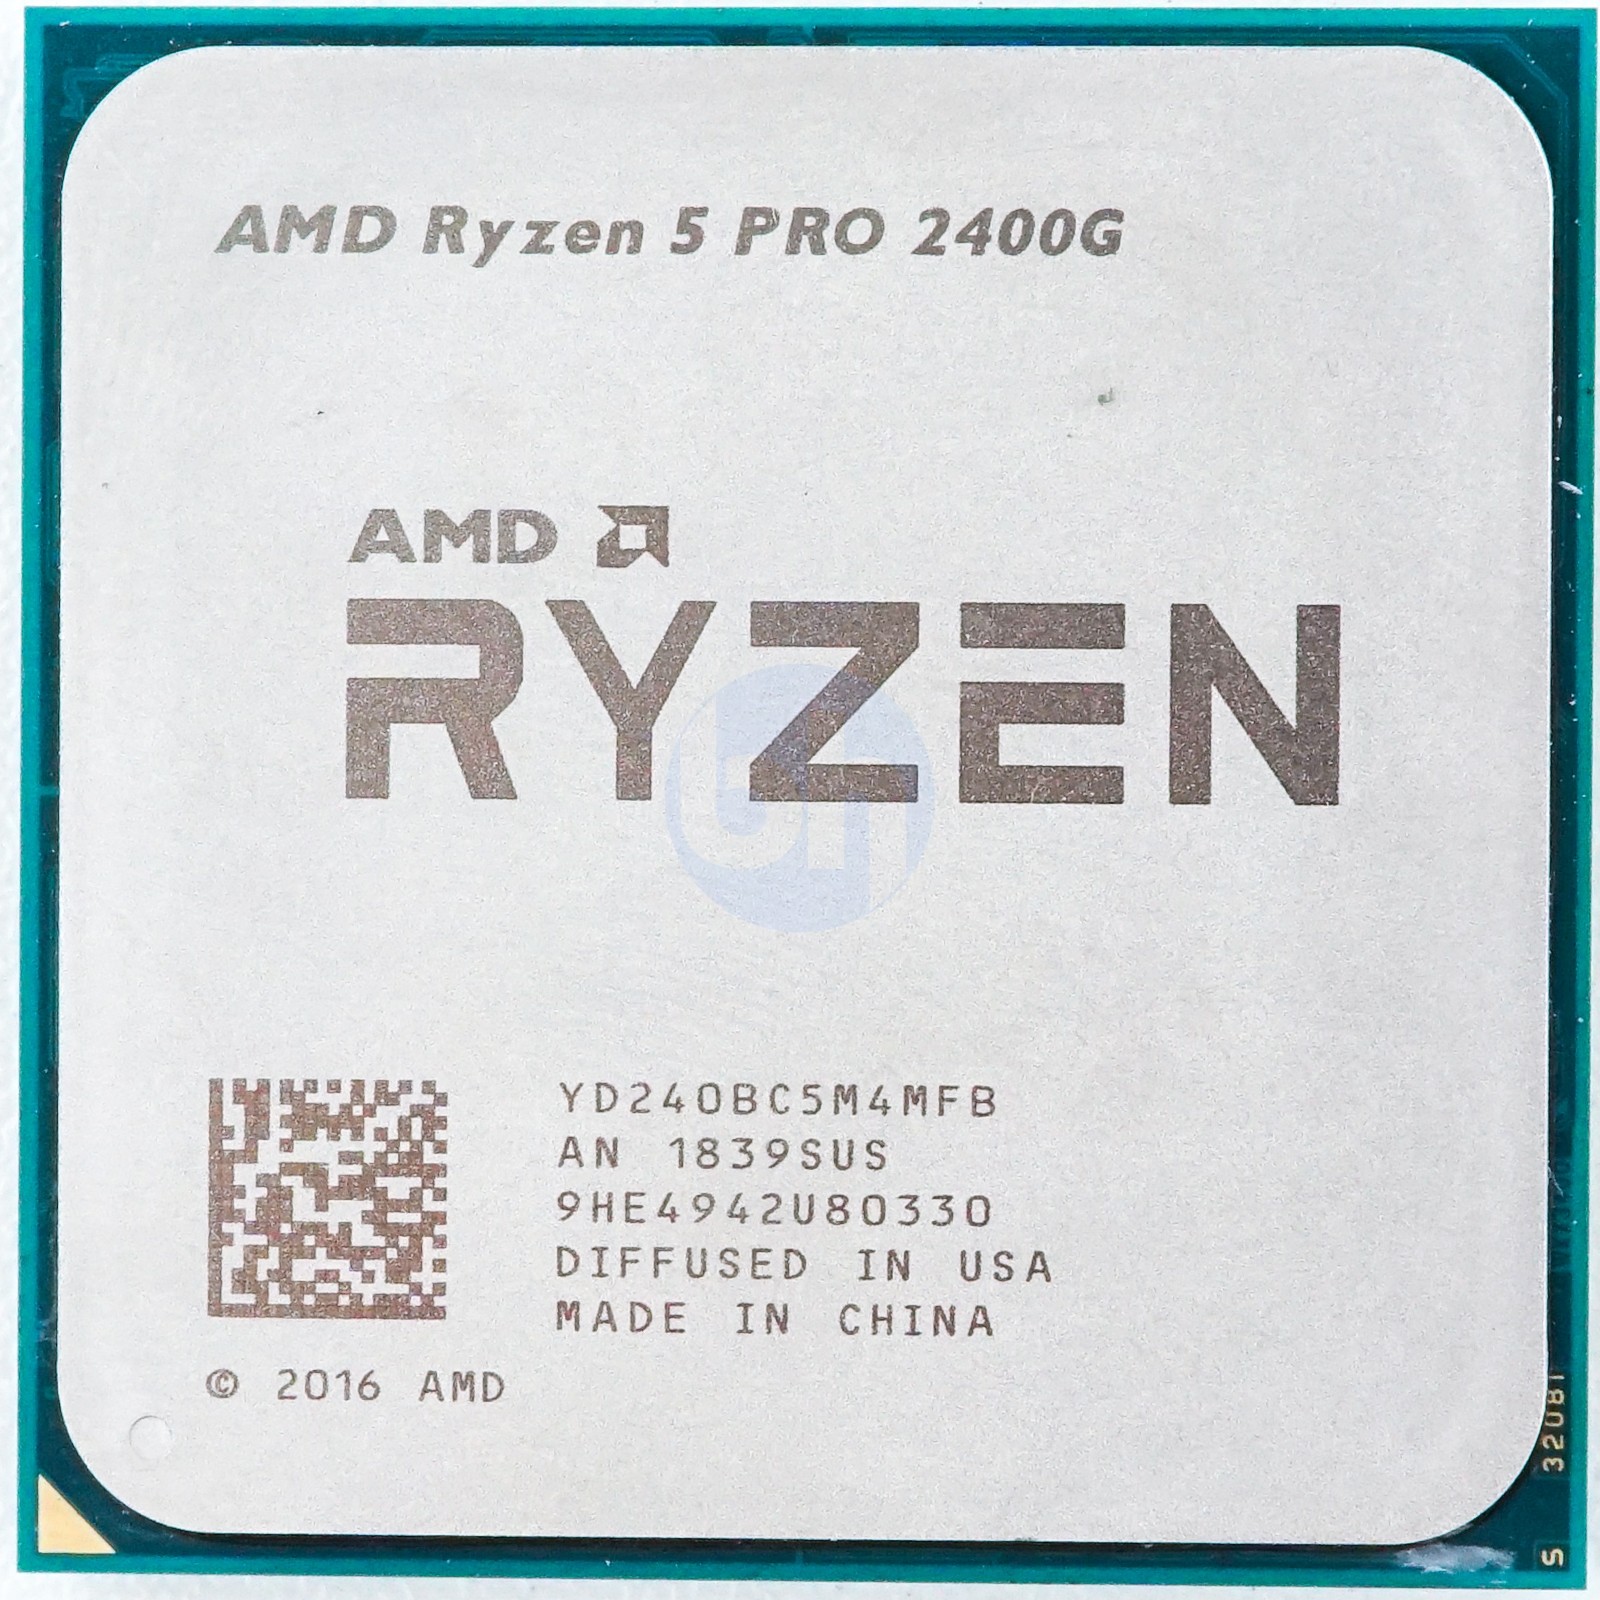 YD240BC5M4MFB AMD Ryzen 5 PRO 2400G (YD240BC5M4MFB) 3.60GHz 4-Core 4MB 45-64W CPU